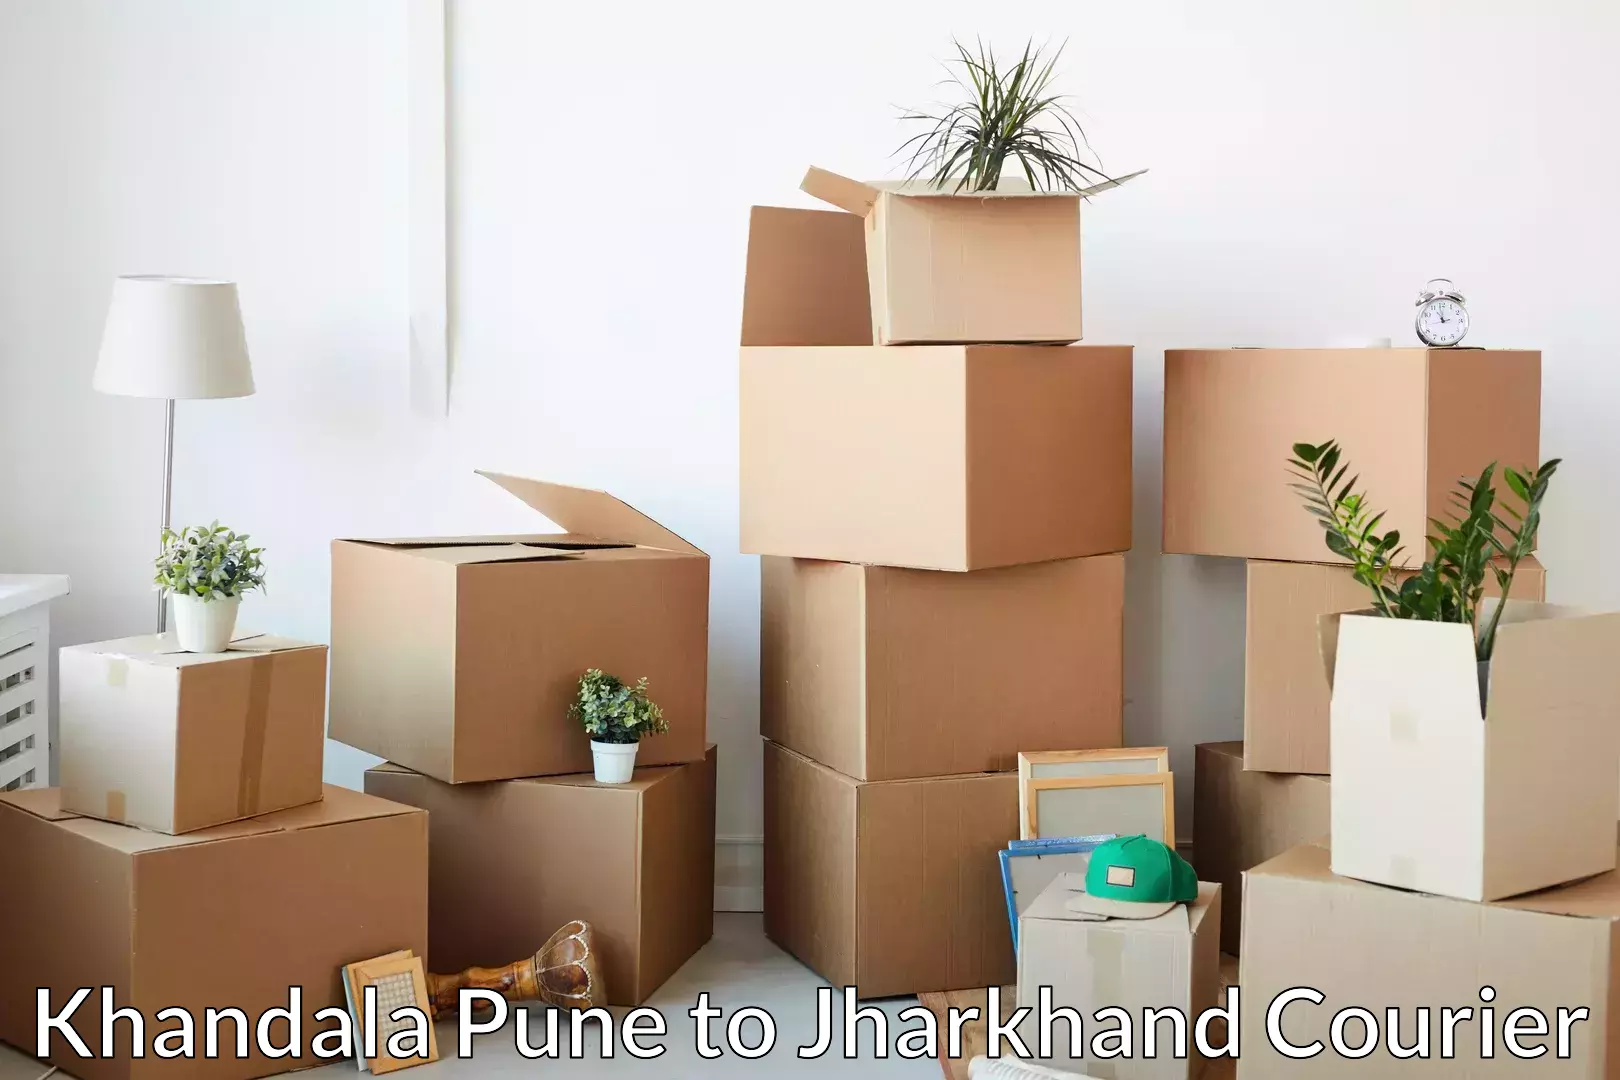 Household goods transport service Khandala Pune to Jharkhand